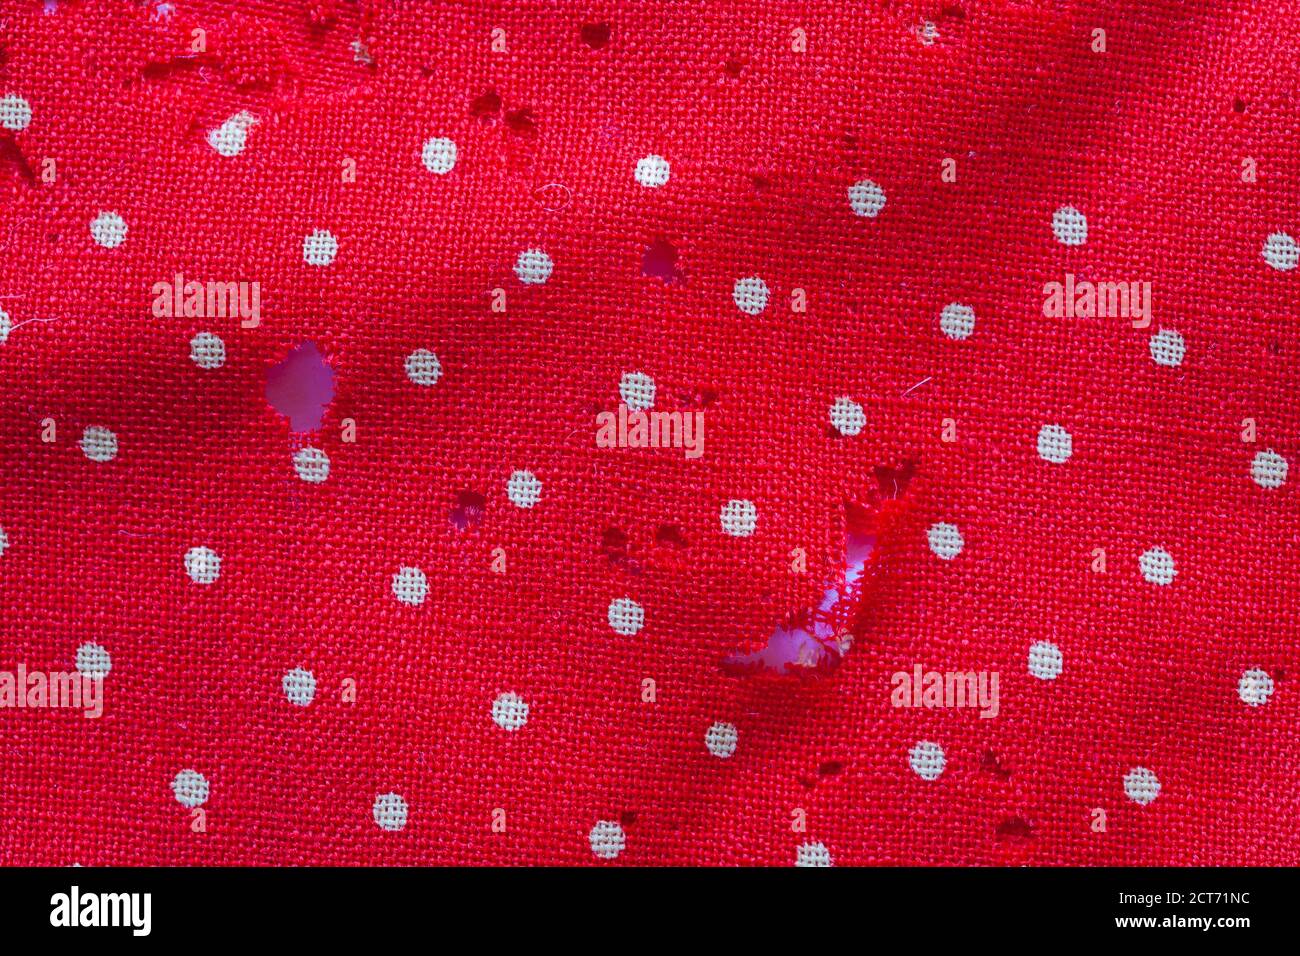 Agujero de polilla en tela fotografías e imágenes de alta resolución - Alamy